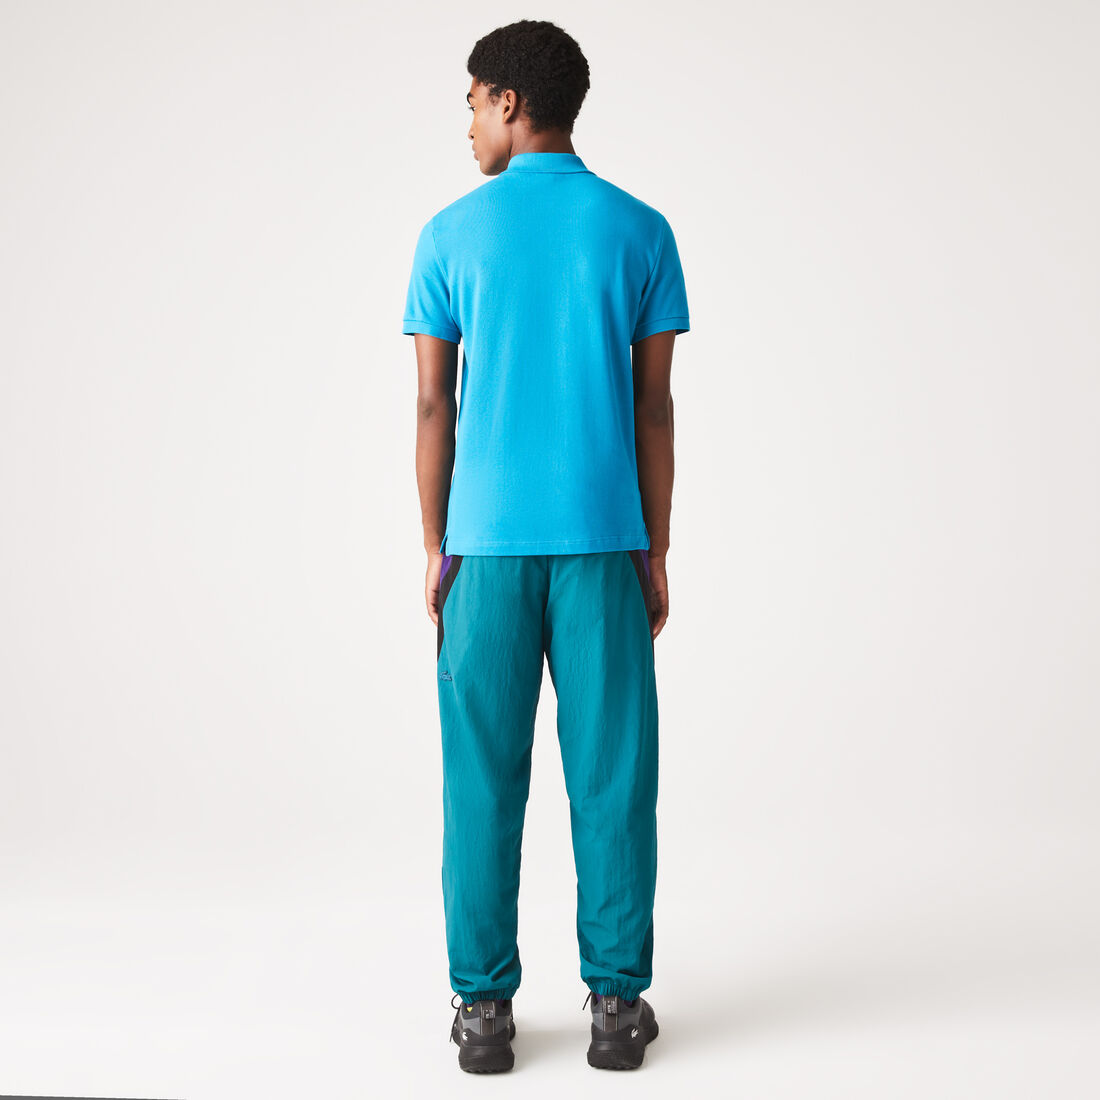 Lacoste Slim Fit In Petit Piqué Polo Shirts Herren Blau | XRBZ-21603